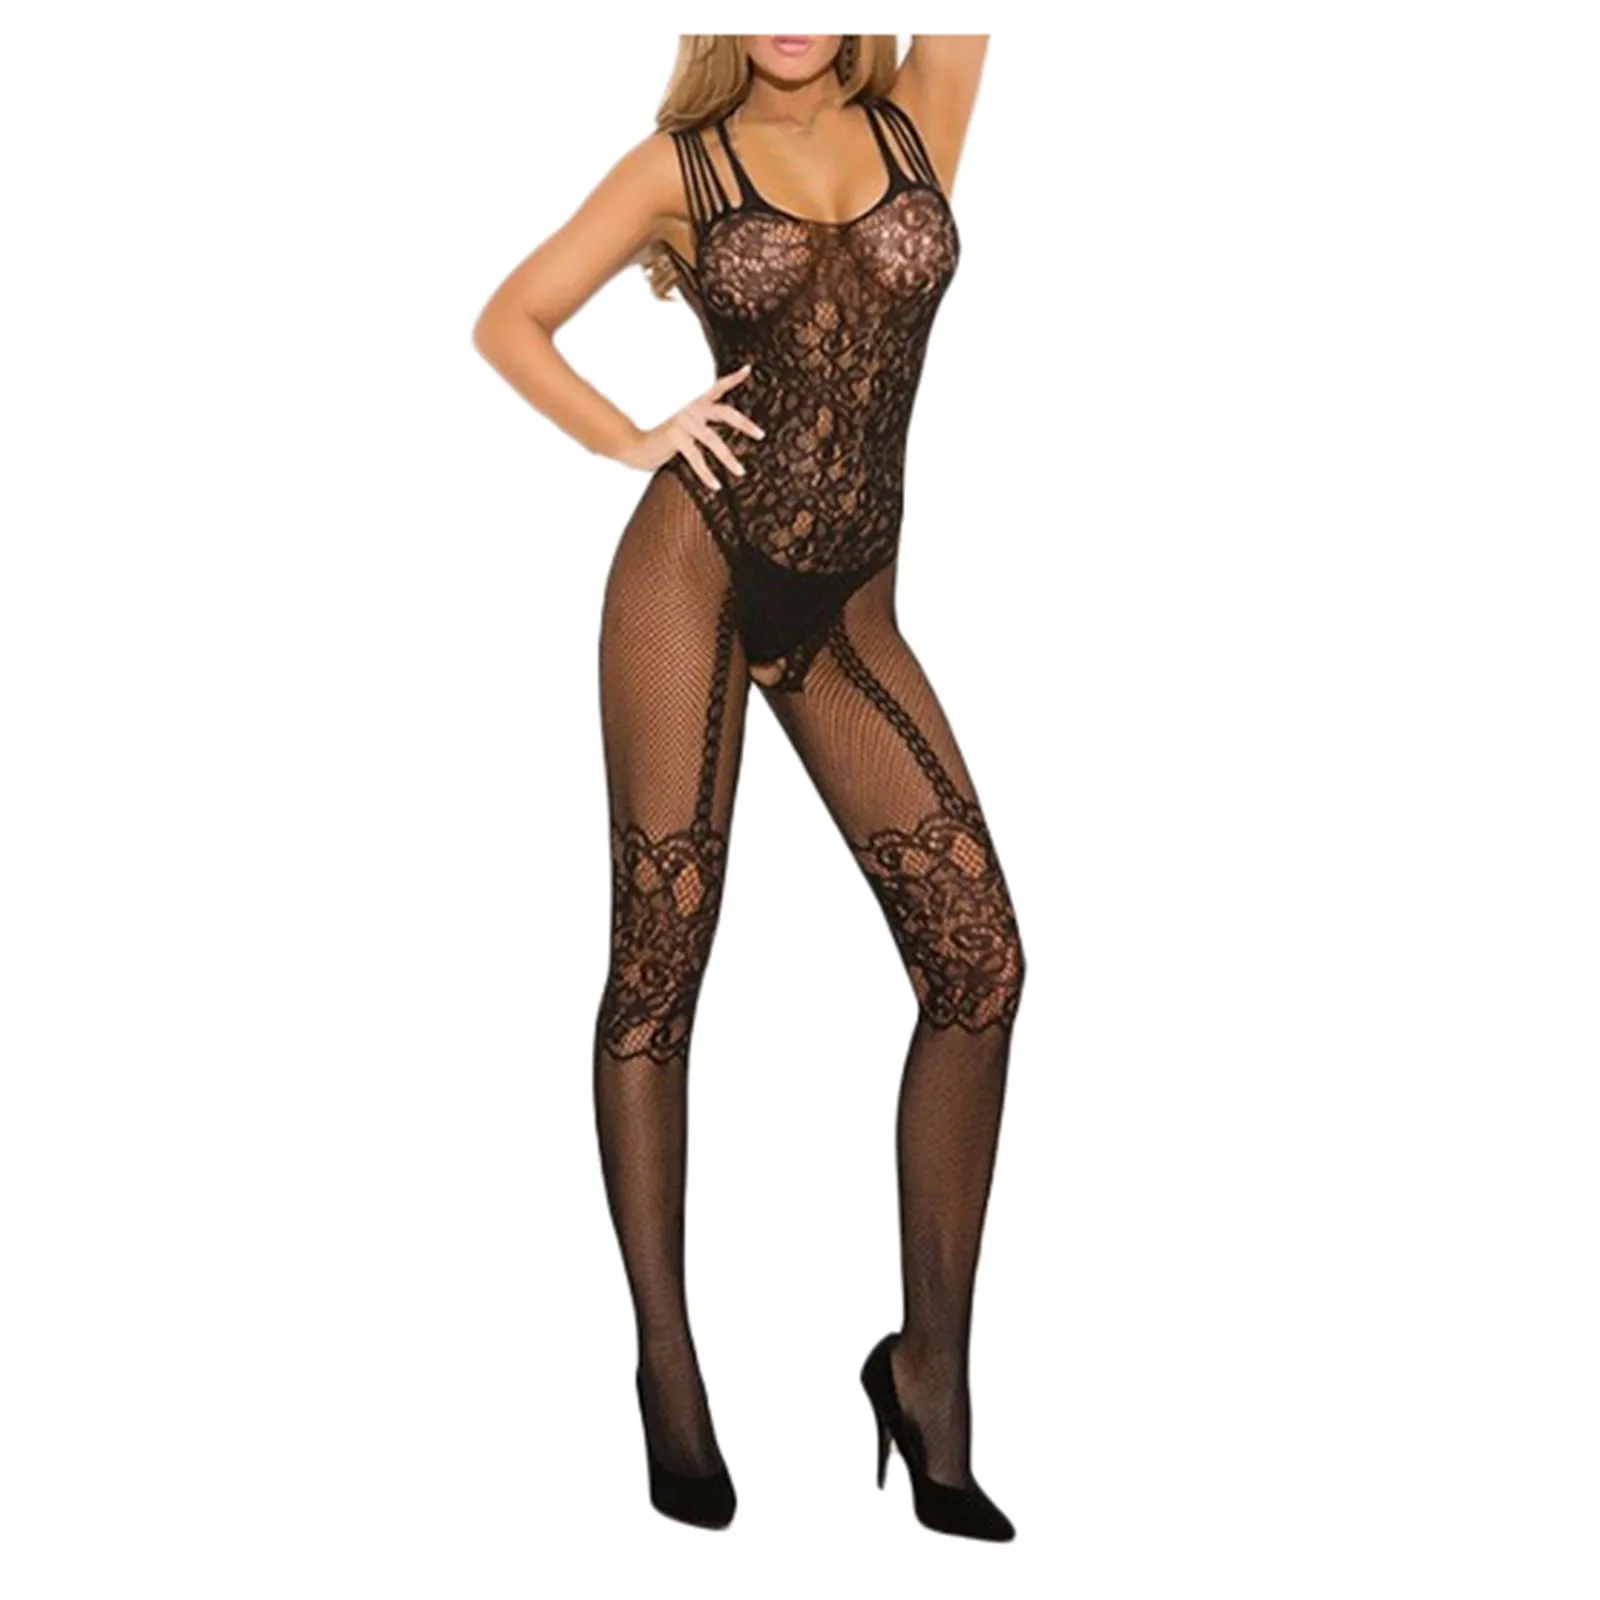 Sexy Women Erotic Black Bodystockings Fishnet Open Crotch catsuit Mesh tights Lingerie Bodysuit Costumes jumpsuit Teddies